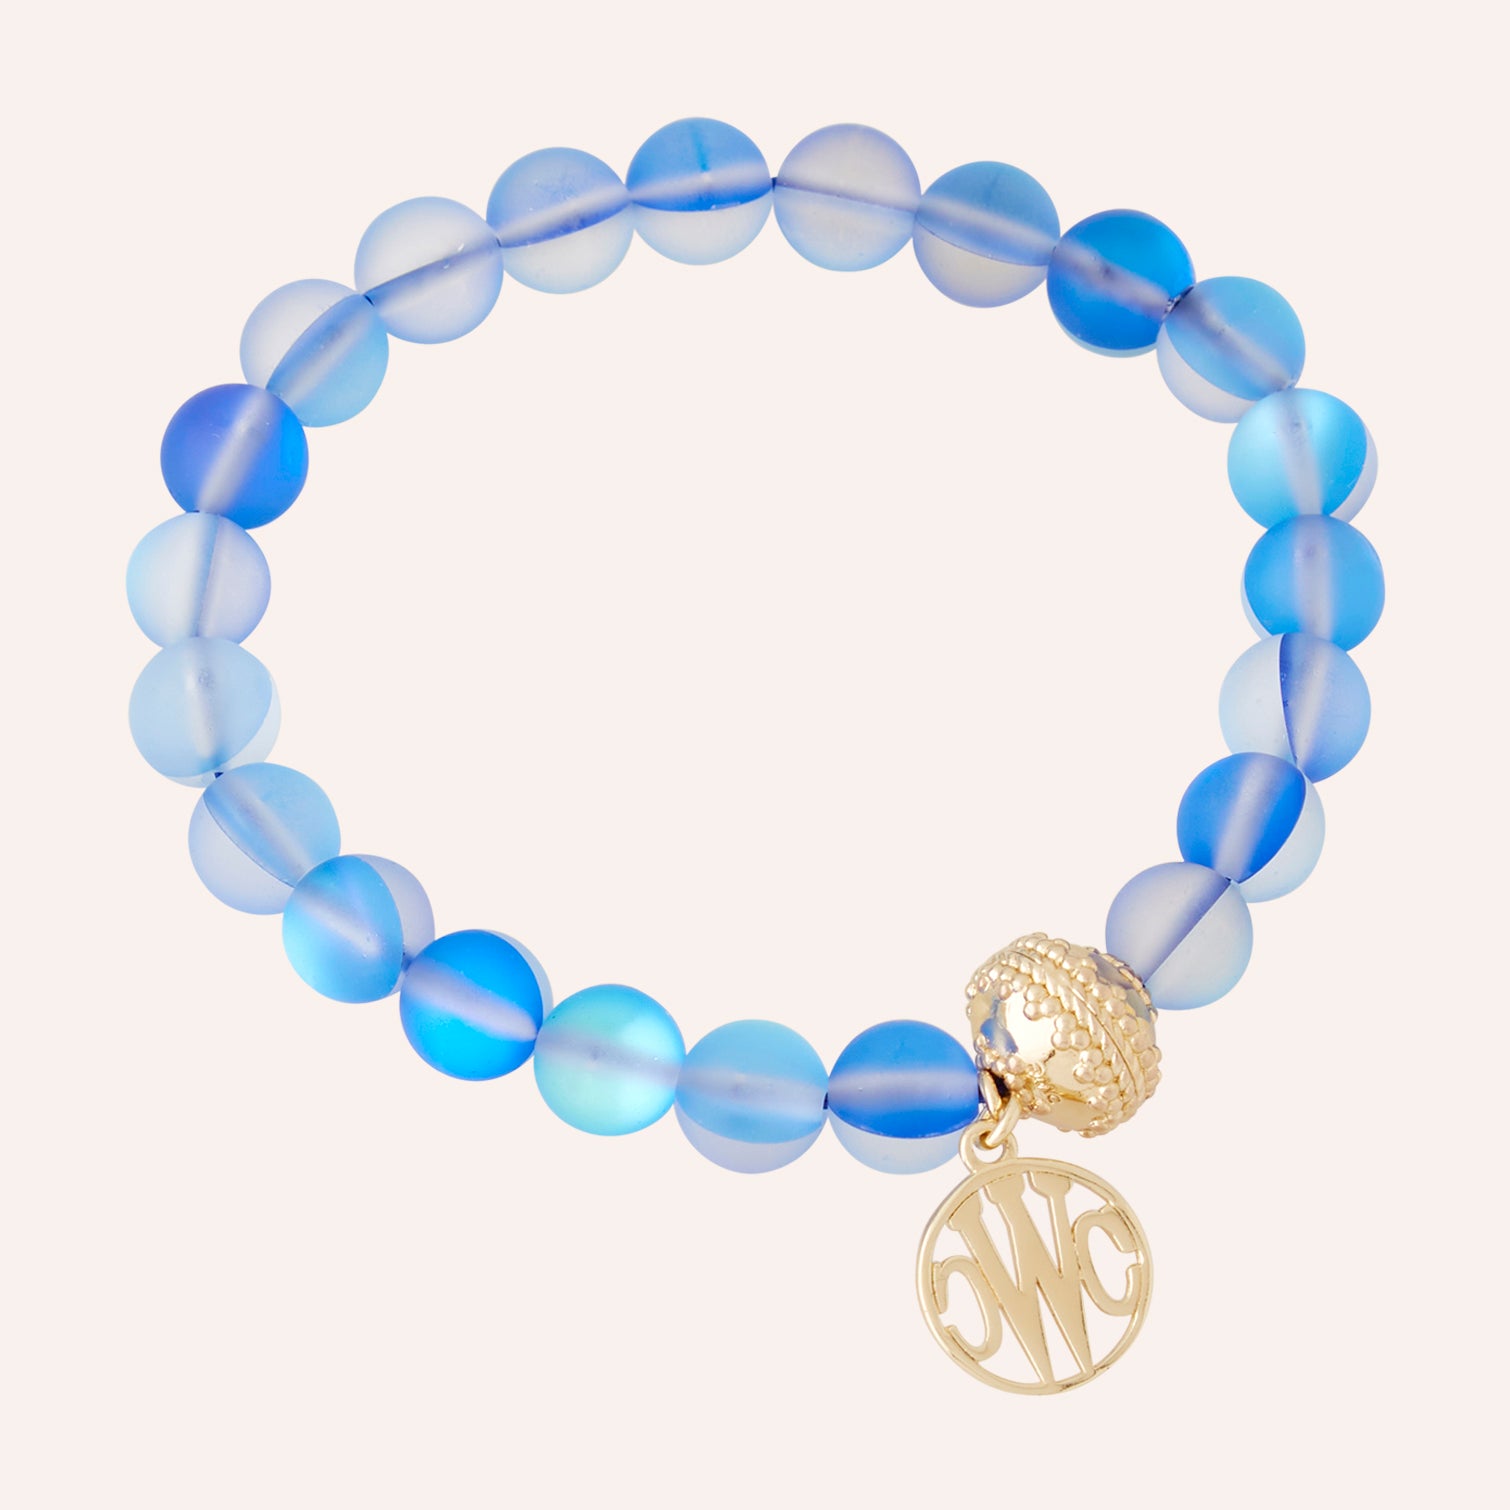 Victoire Cosmic Blue Glass 8.5mm Stretch Bracelet